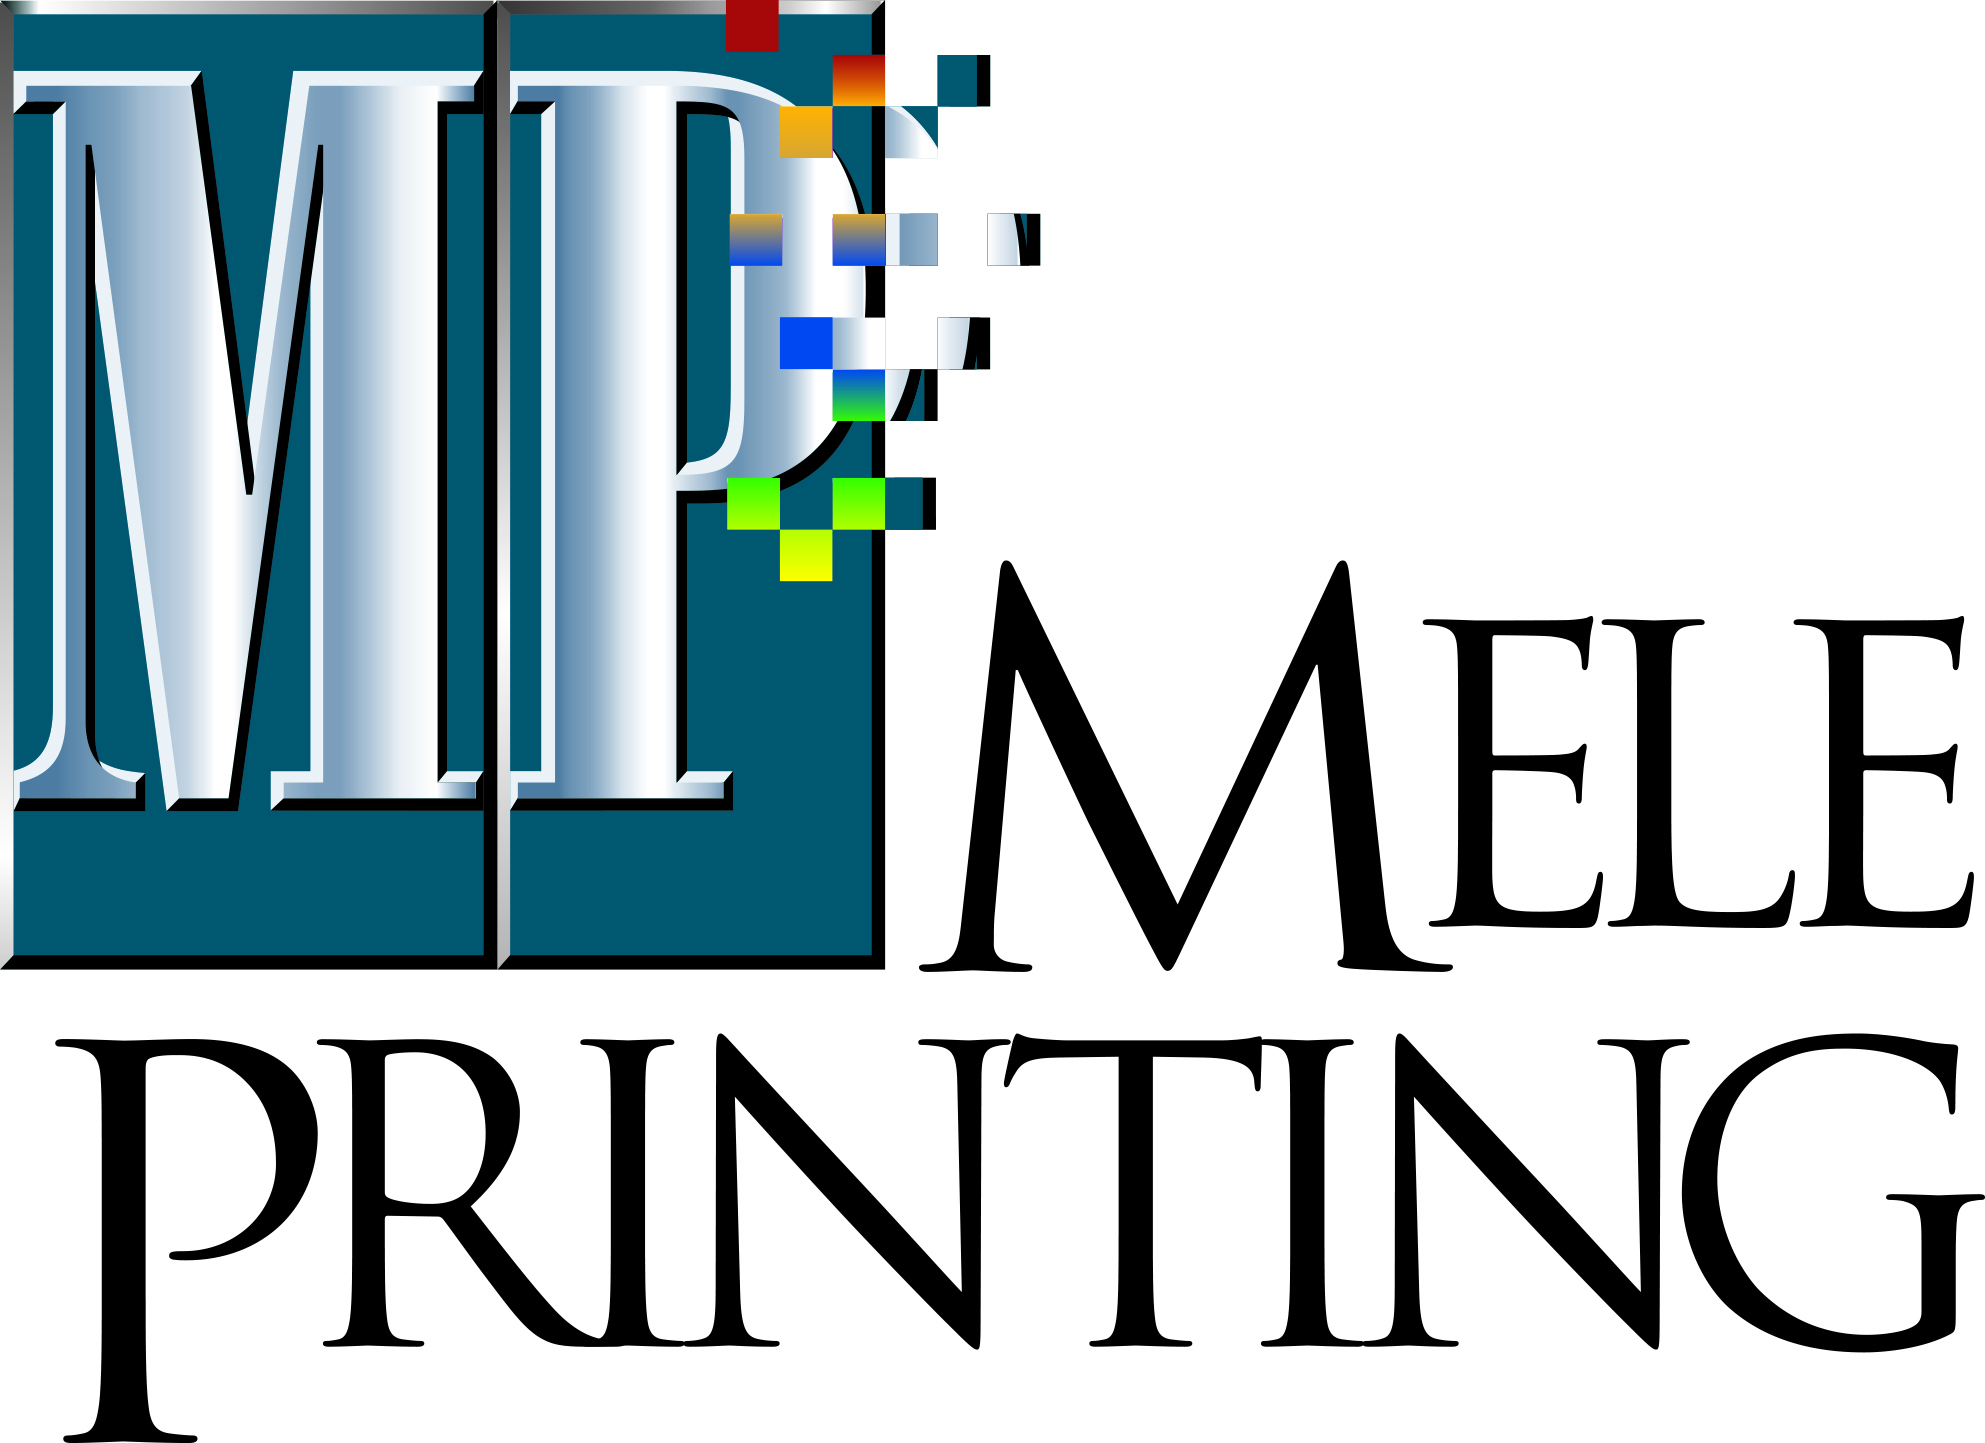 Mele Printing